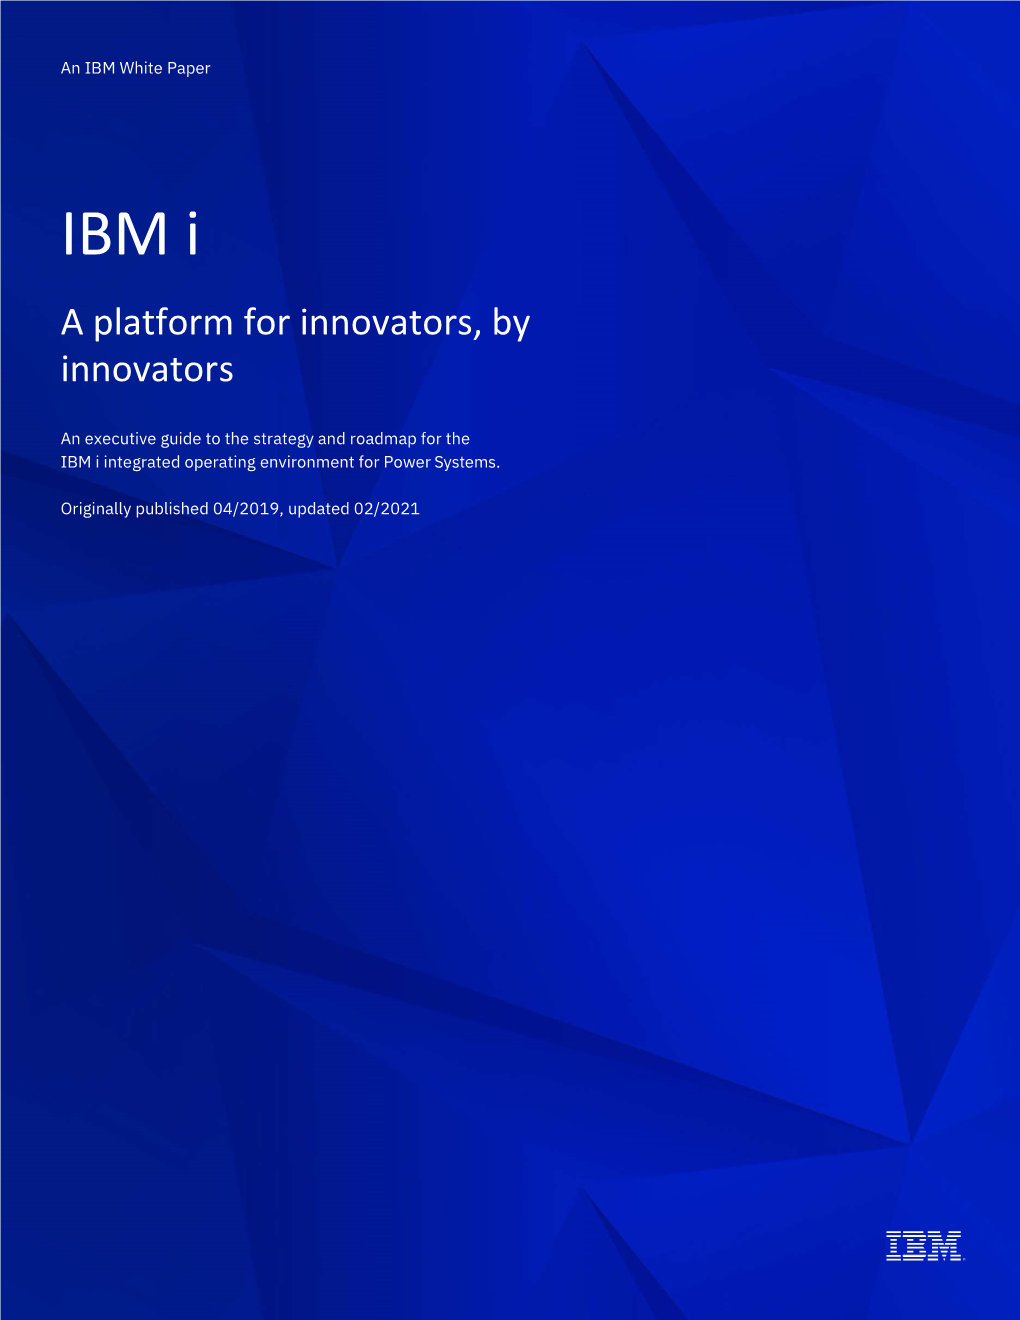 IBM I Strategy and Roadmap